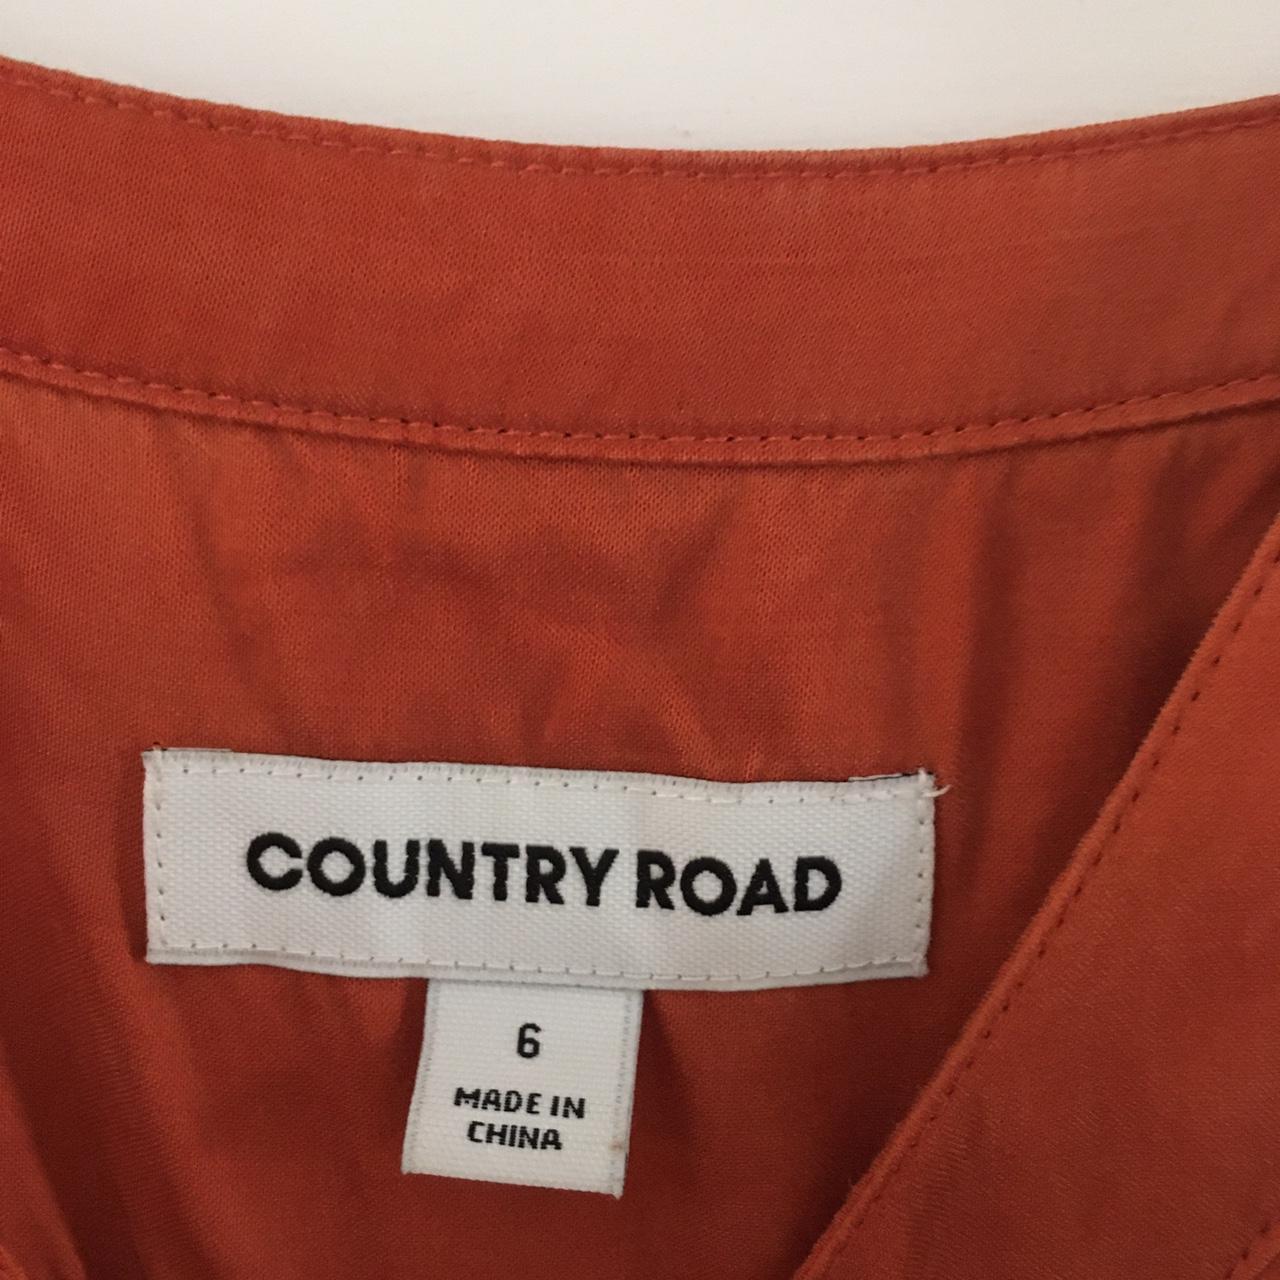 Country Road maxi dress #countryroad #maxi - Depop